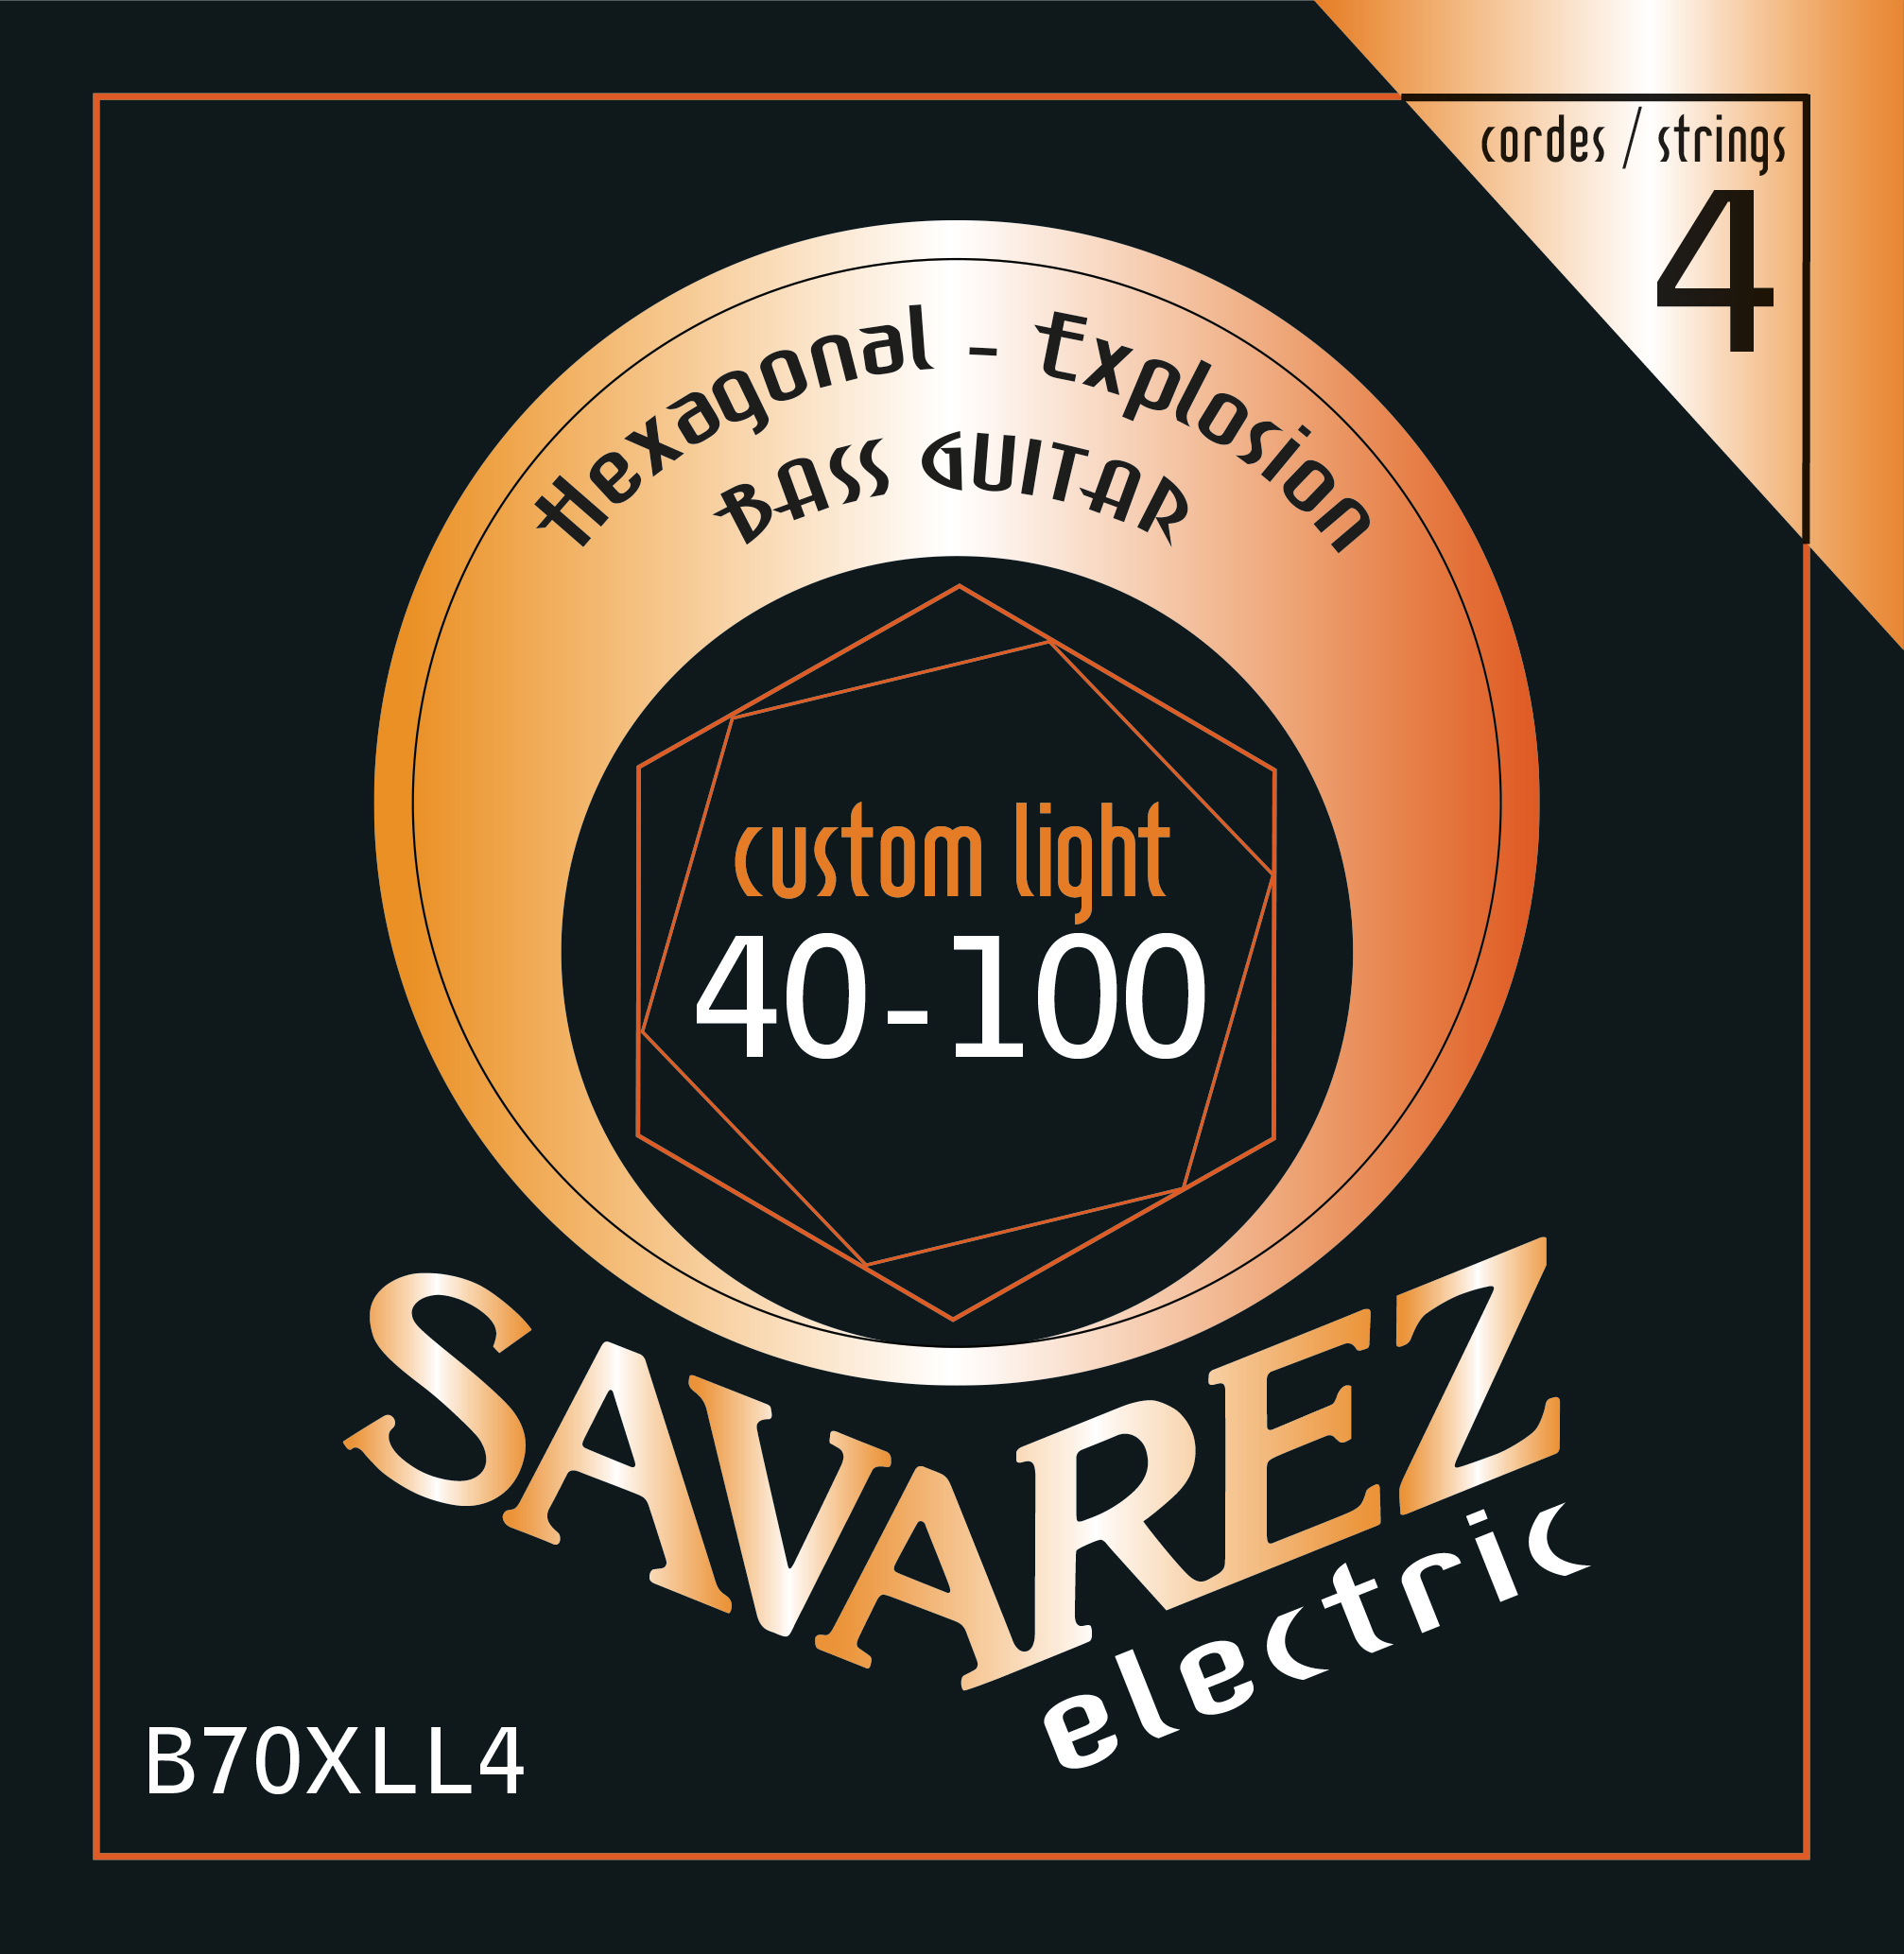 SAVAREZ ELECTRIC HEXAGONAL EXPLOSION BASSE B70XLL4